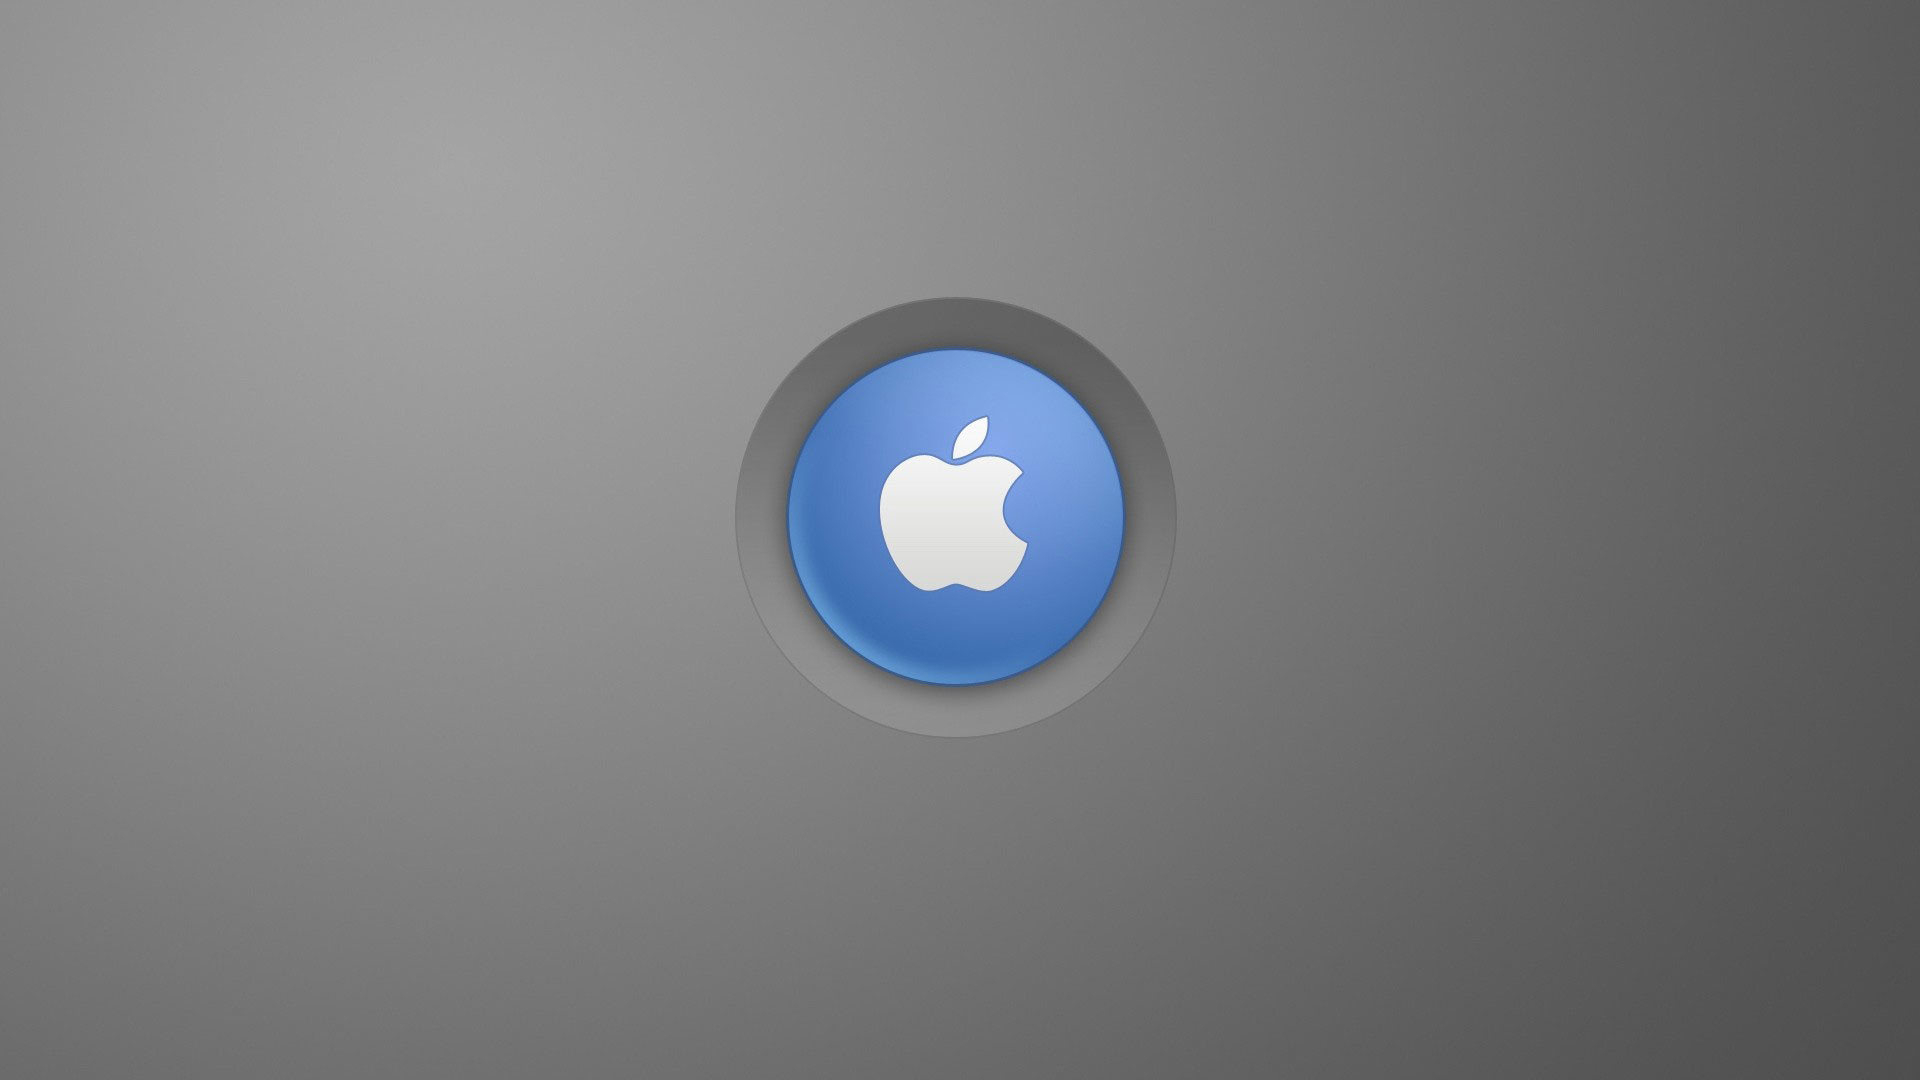 1920x1080 hd pics photos best blue apple logo push button hd quality desktop  background wallpaper